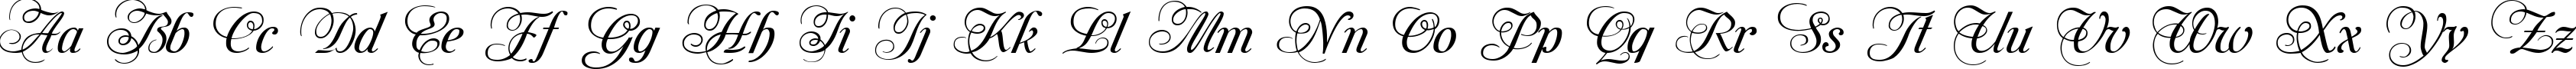 Пример написания английского алфавита шрифтом Mon Amour Two Medium